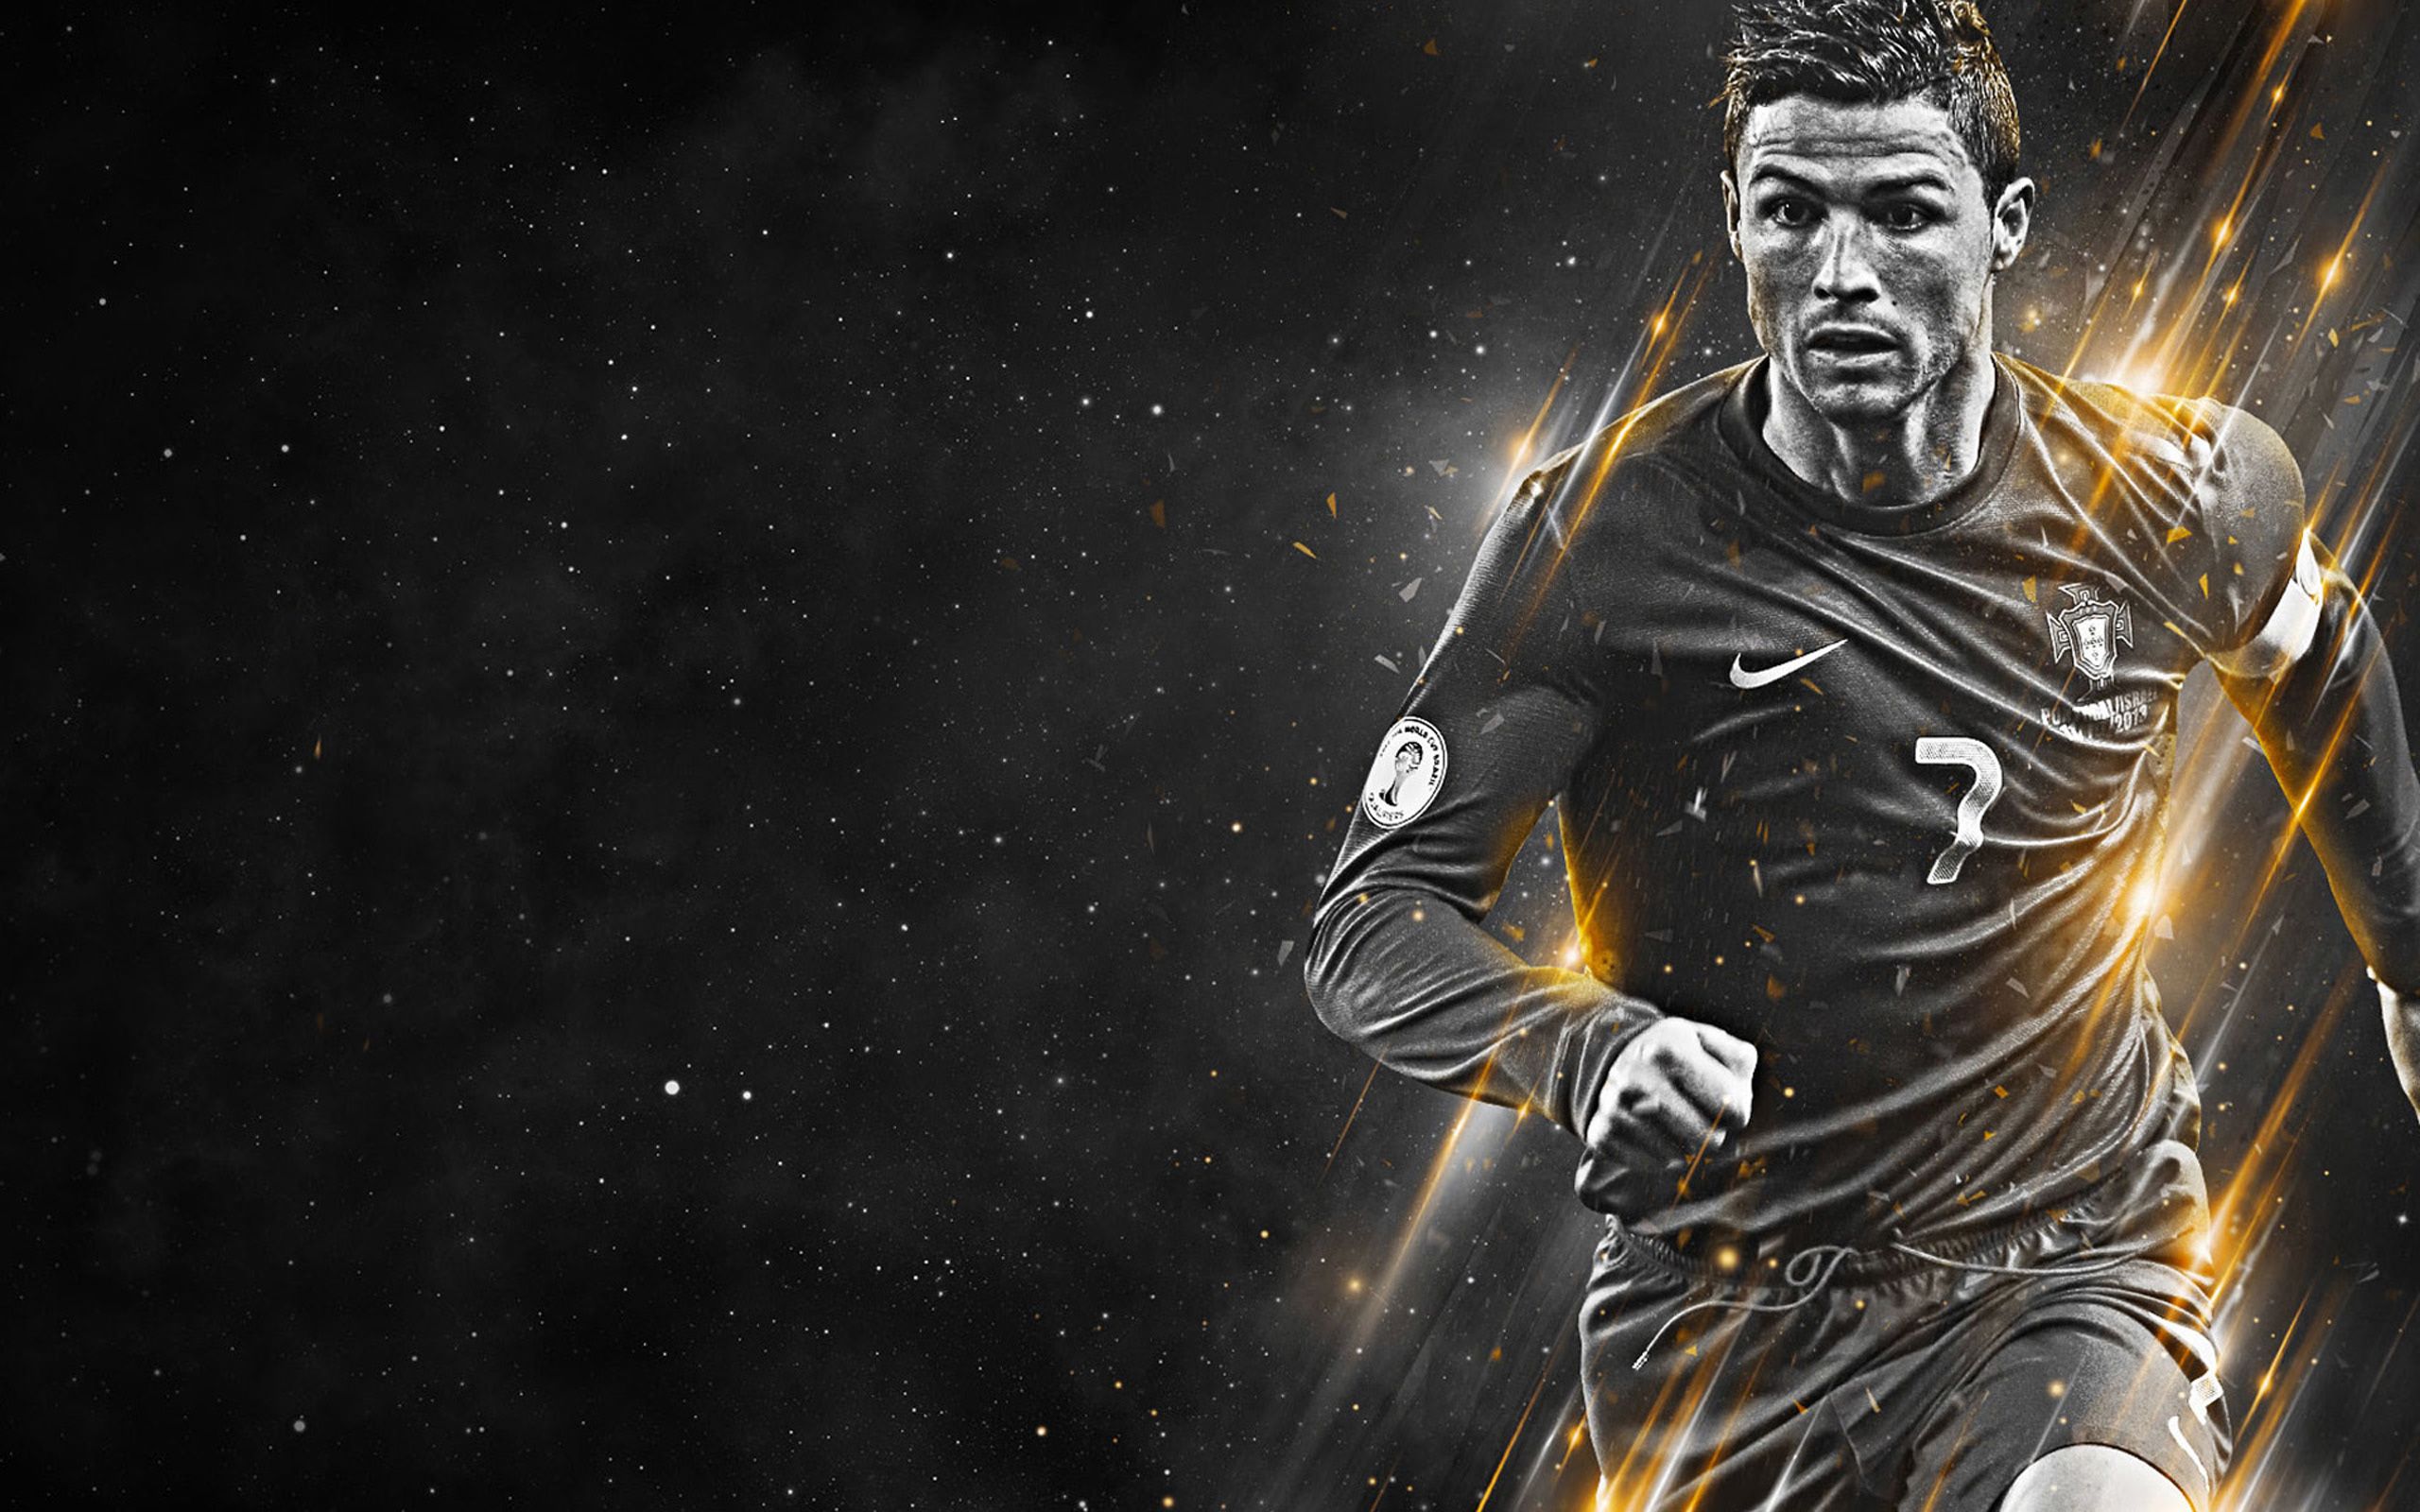 Cristiano Ronaldo black and white wallpaper. Cristiano ronaldo wallpaper, Ronaldo wallpaper, Ronaldo football player